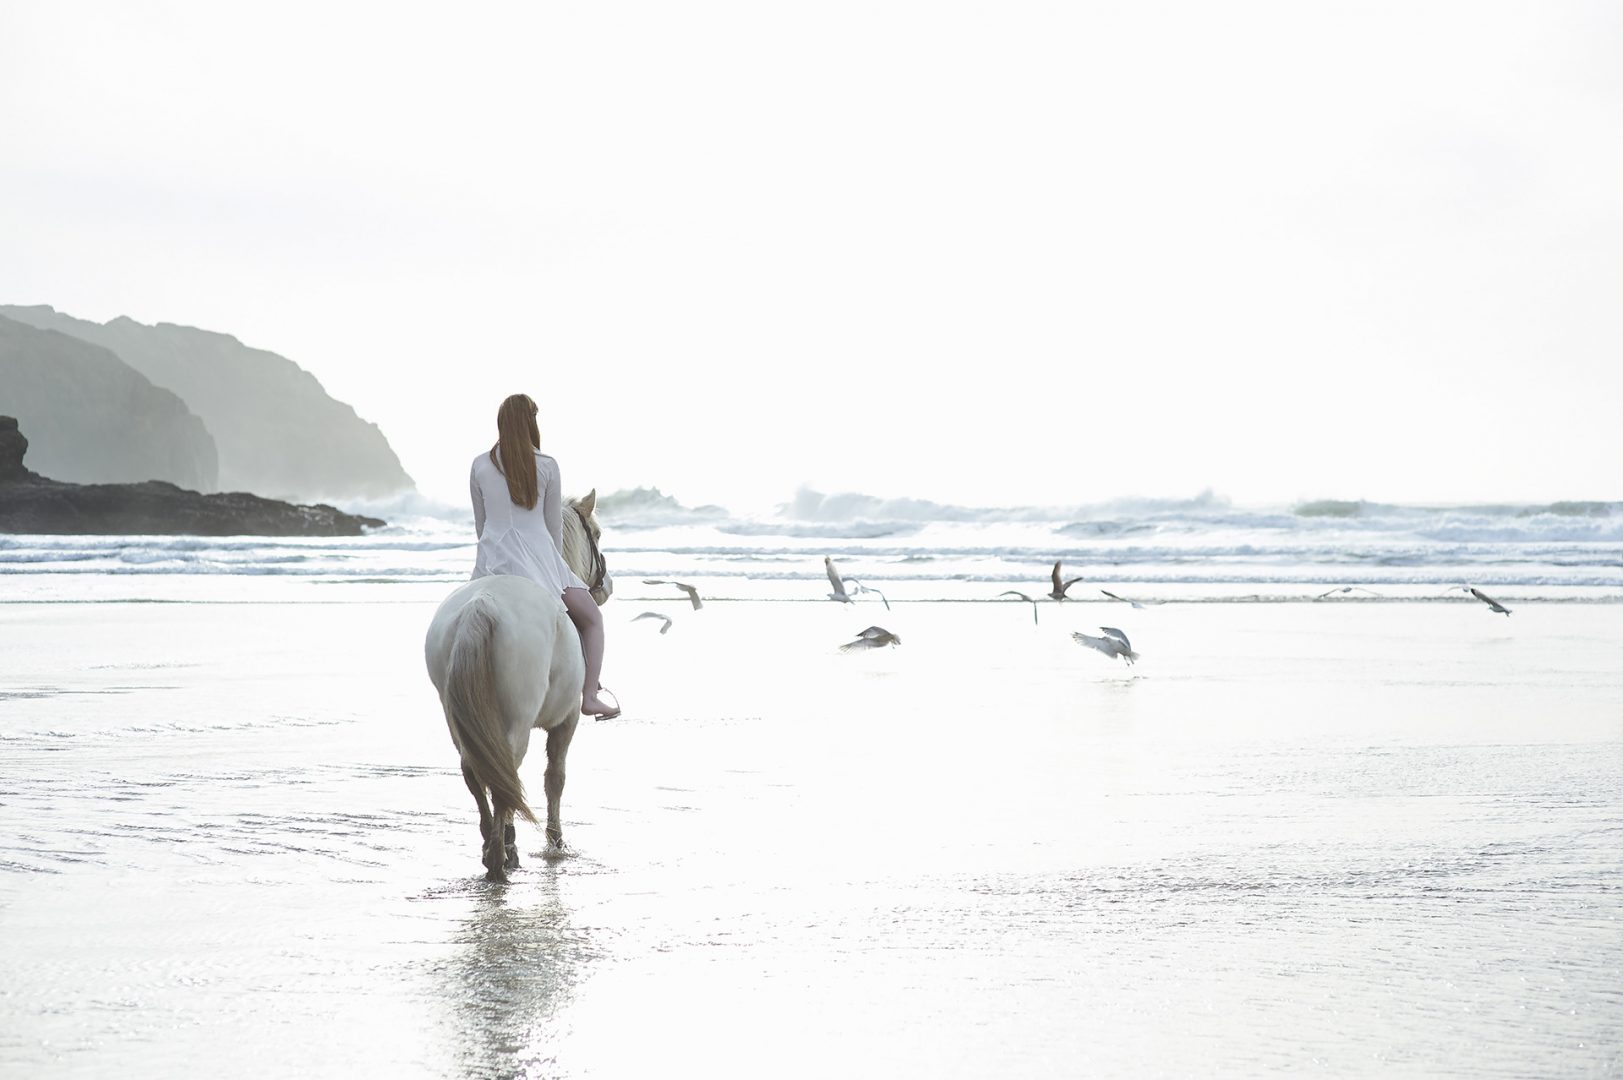 Photograph of a girl riding a horse on a Cornish beach